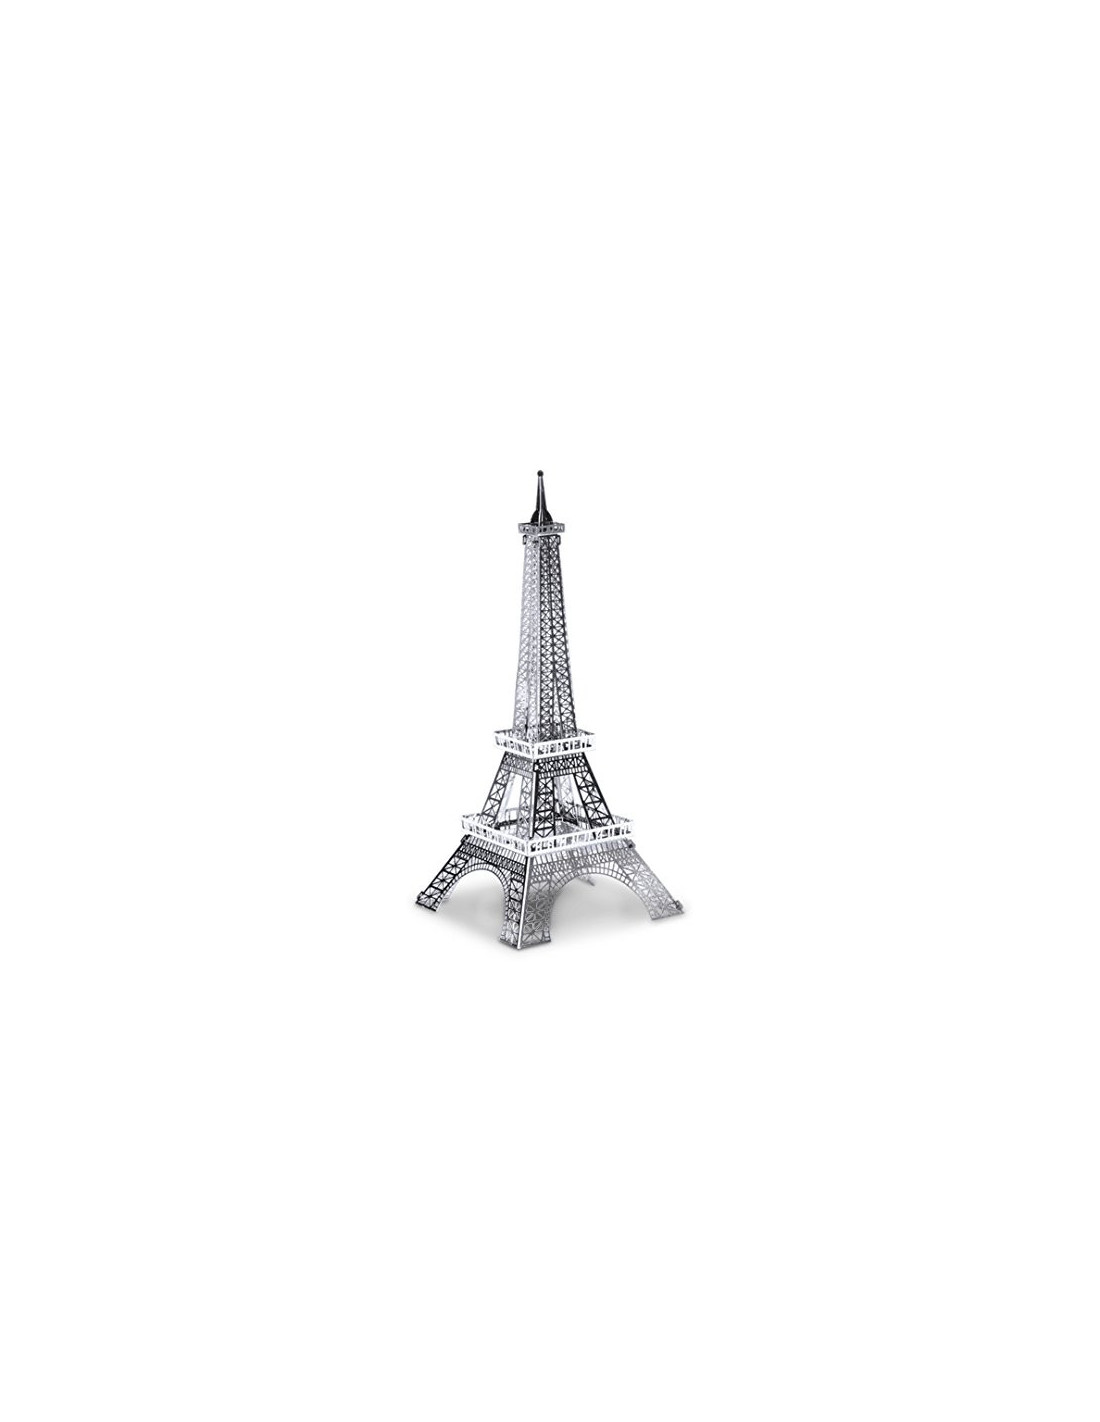 Metal Earth - 5061311 - Maquette 3D - Iconx - Tour Eiffel - 15 x 5